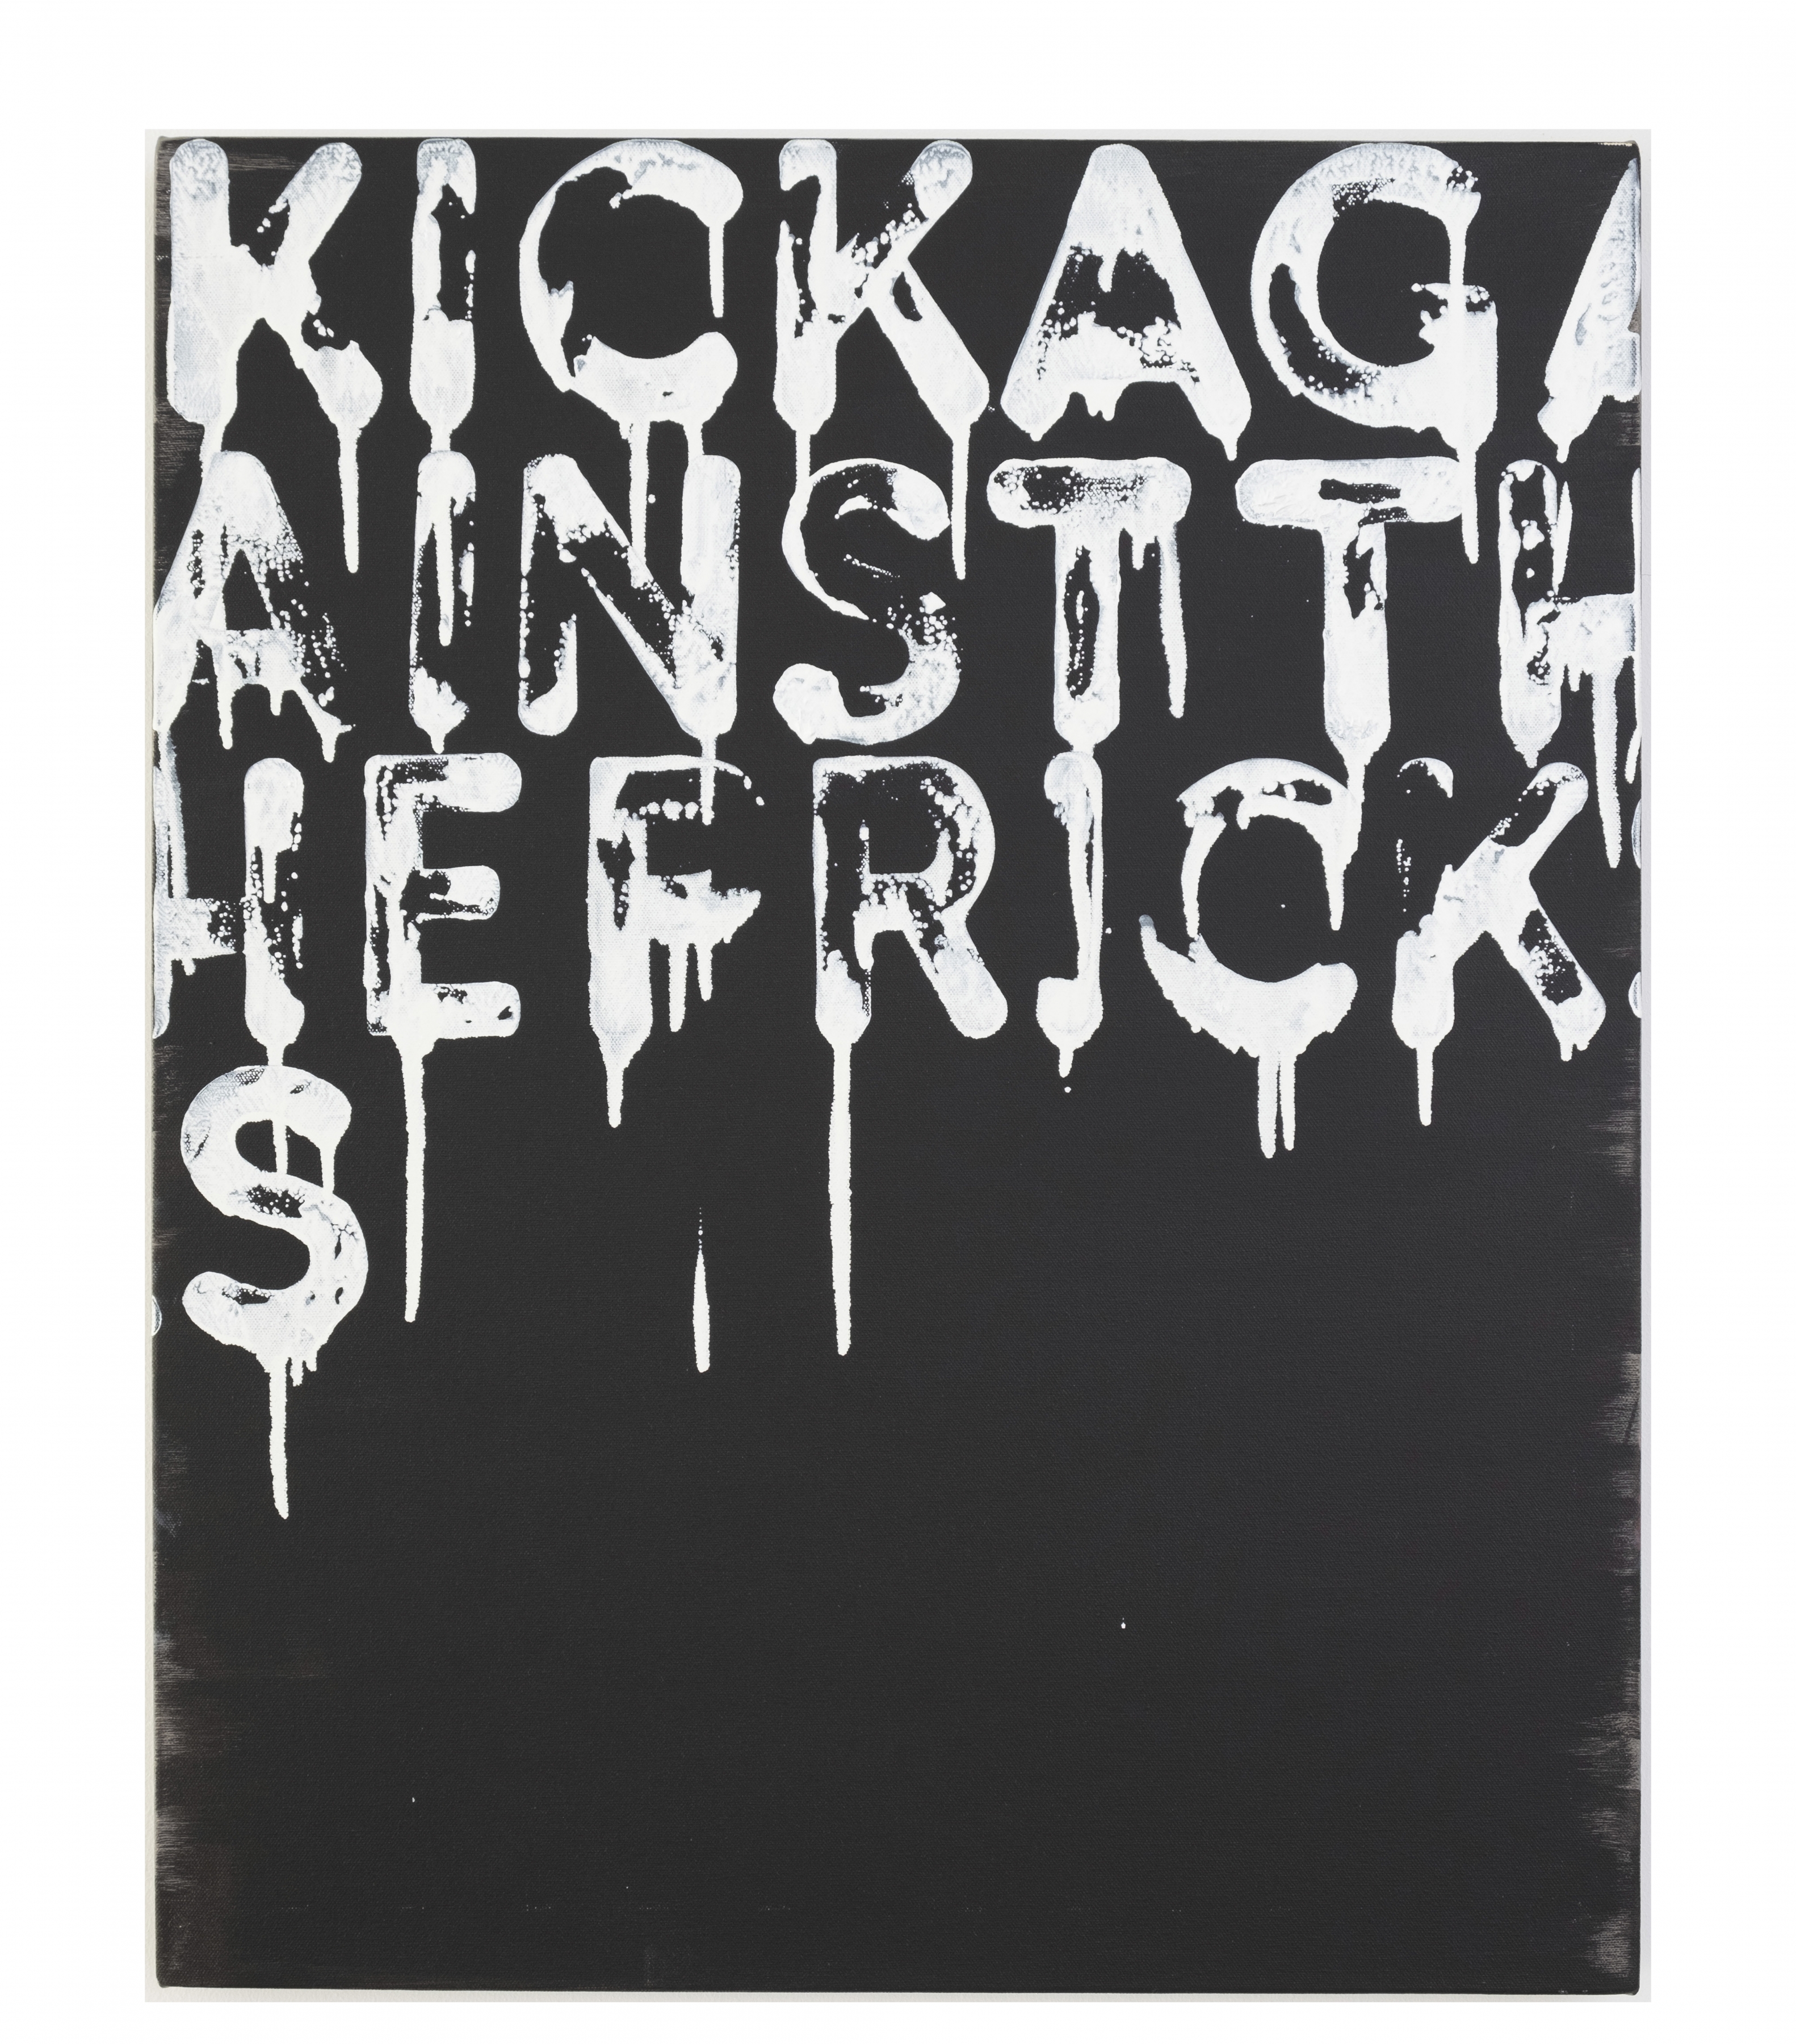 MEL BOCHNER


Kick Against The Pricks
2020
oil on canvas
30 x 24 inches
(76.2 x 61 cm)
PF5945

&nbsp;

INQUIRE